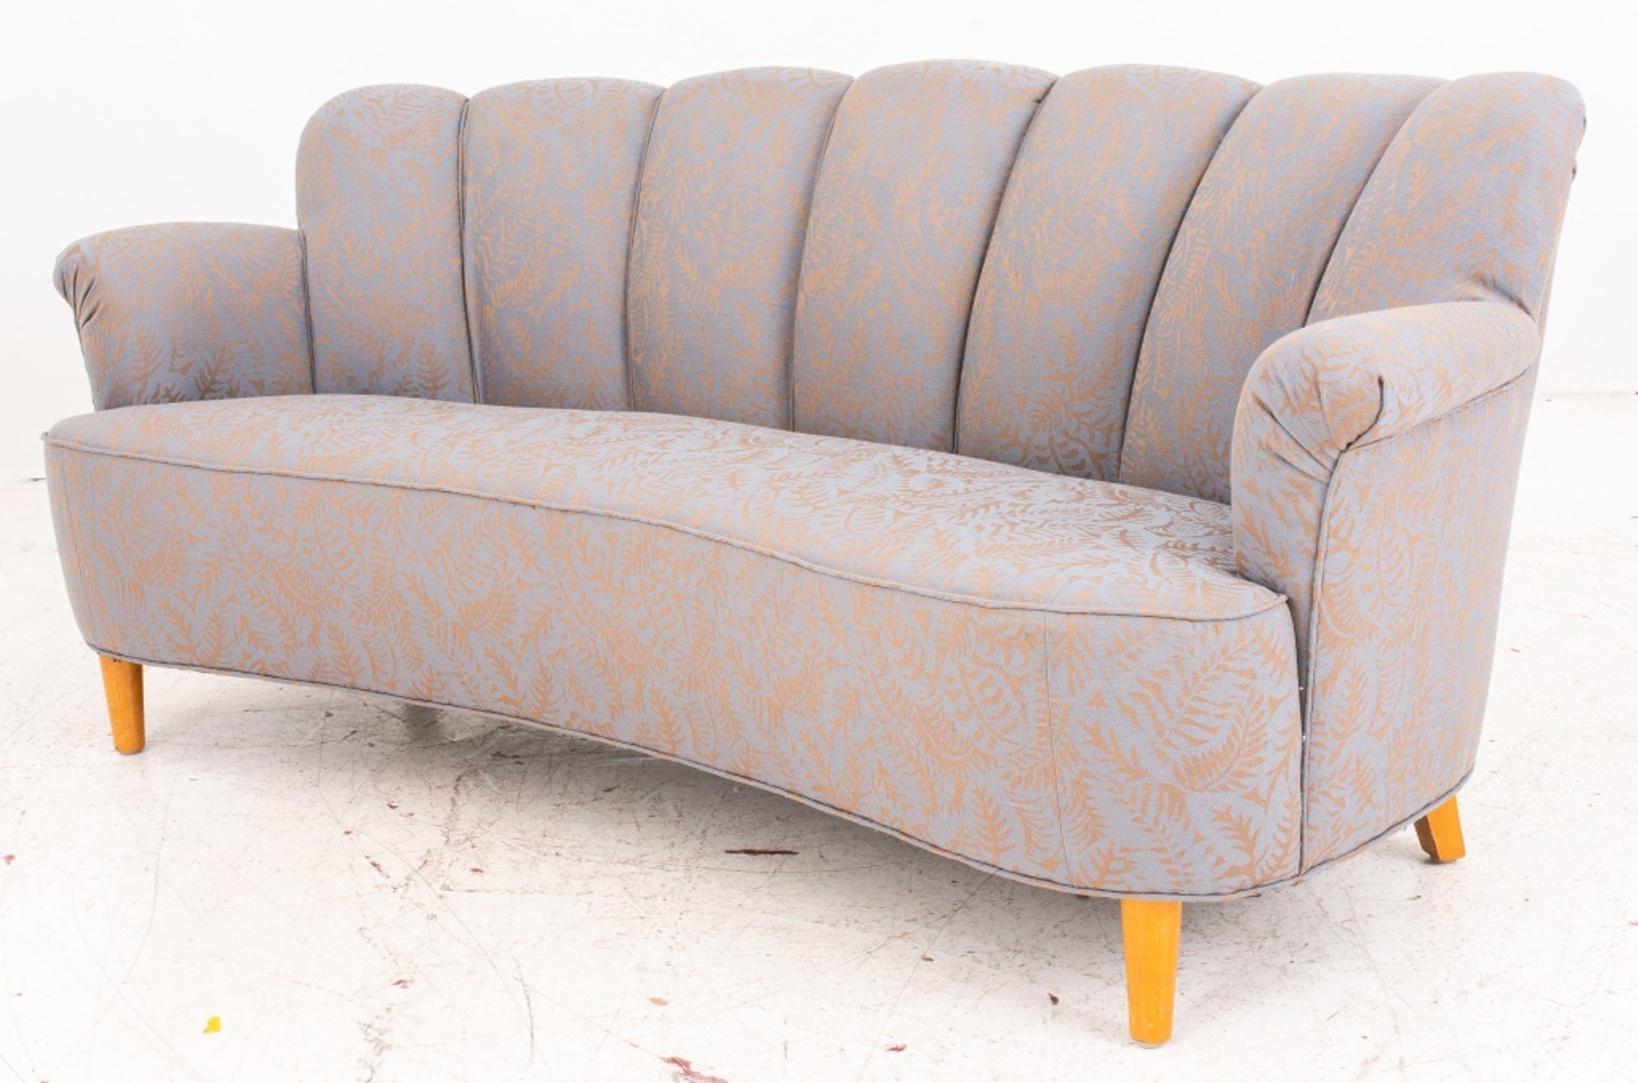 Semikreisförmiges Cocktail-Sofa, 1960er-Jahre (20. Jahrhundert) im Angebot